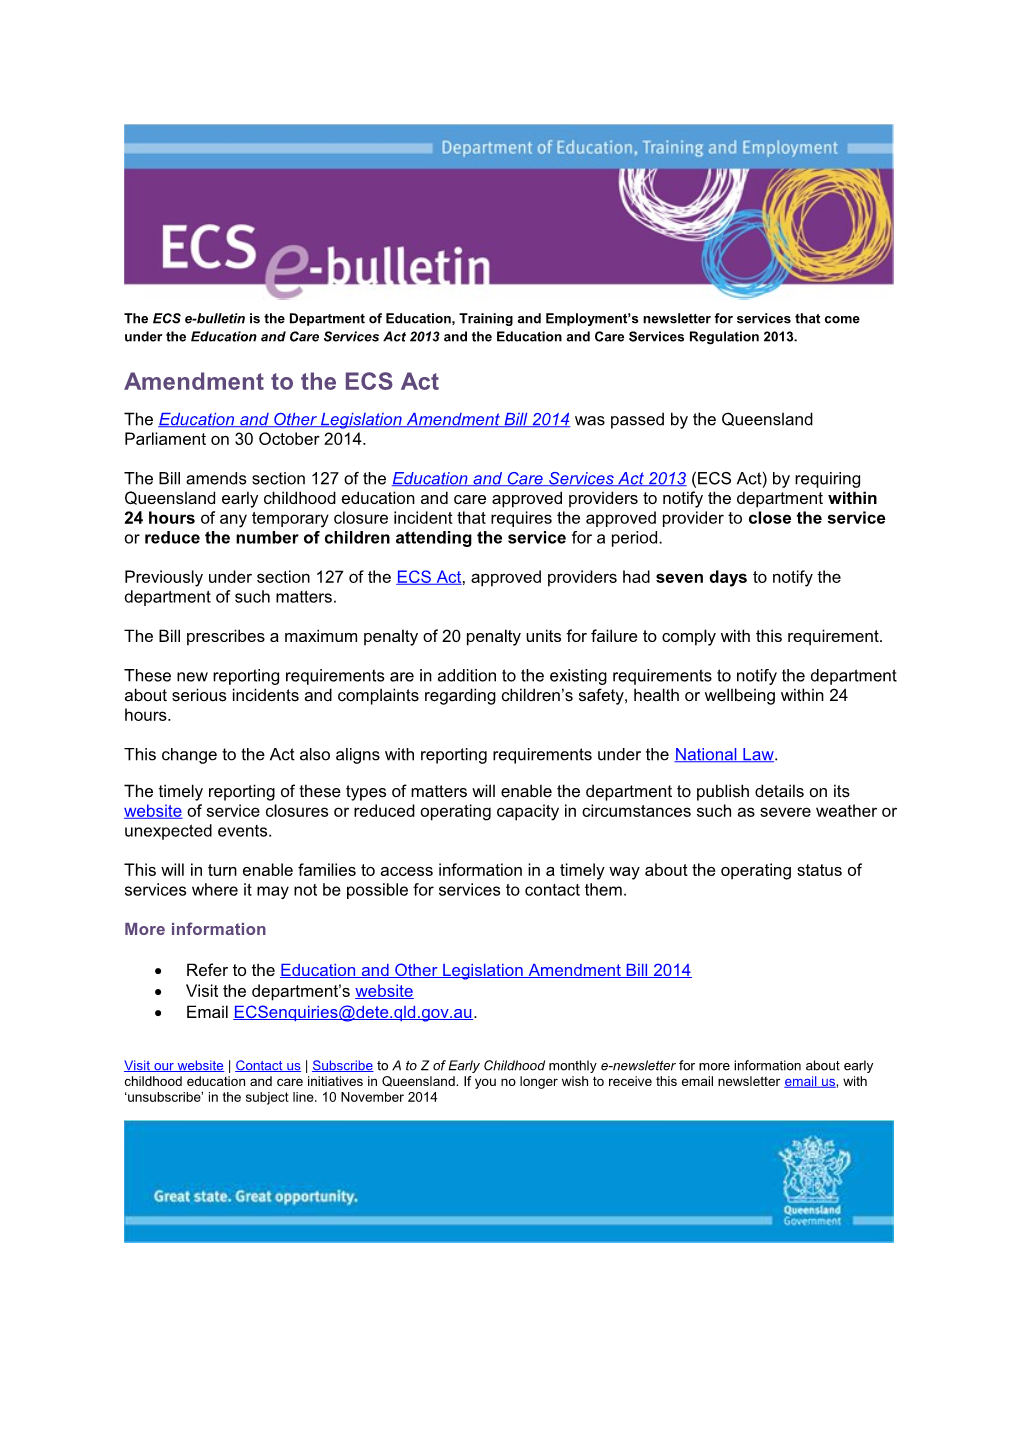 ECS E-Bulleting - Amendments to the ECS Act